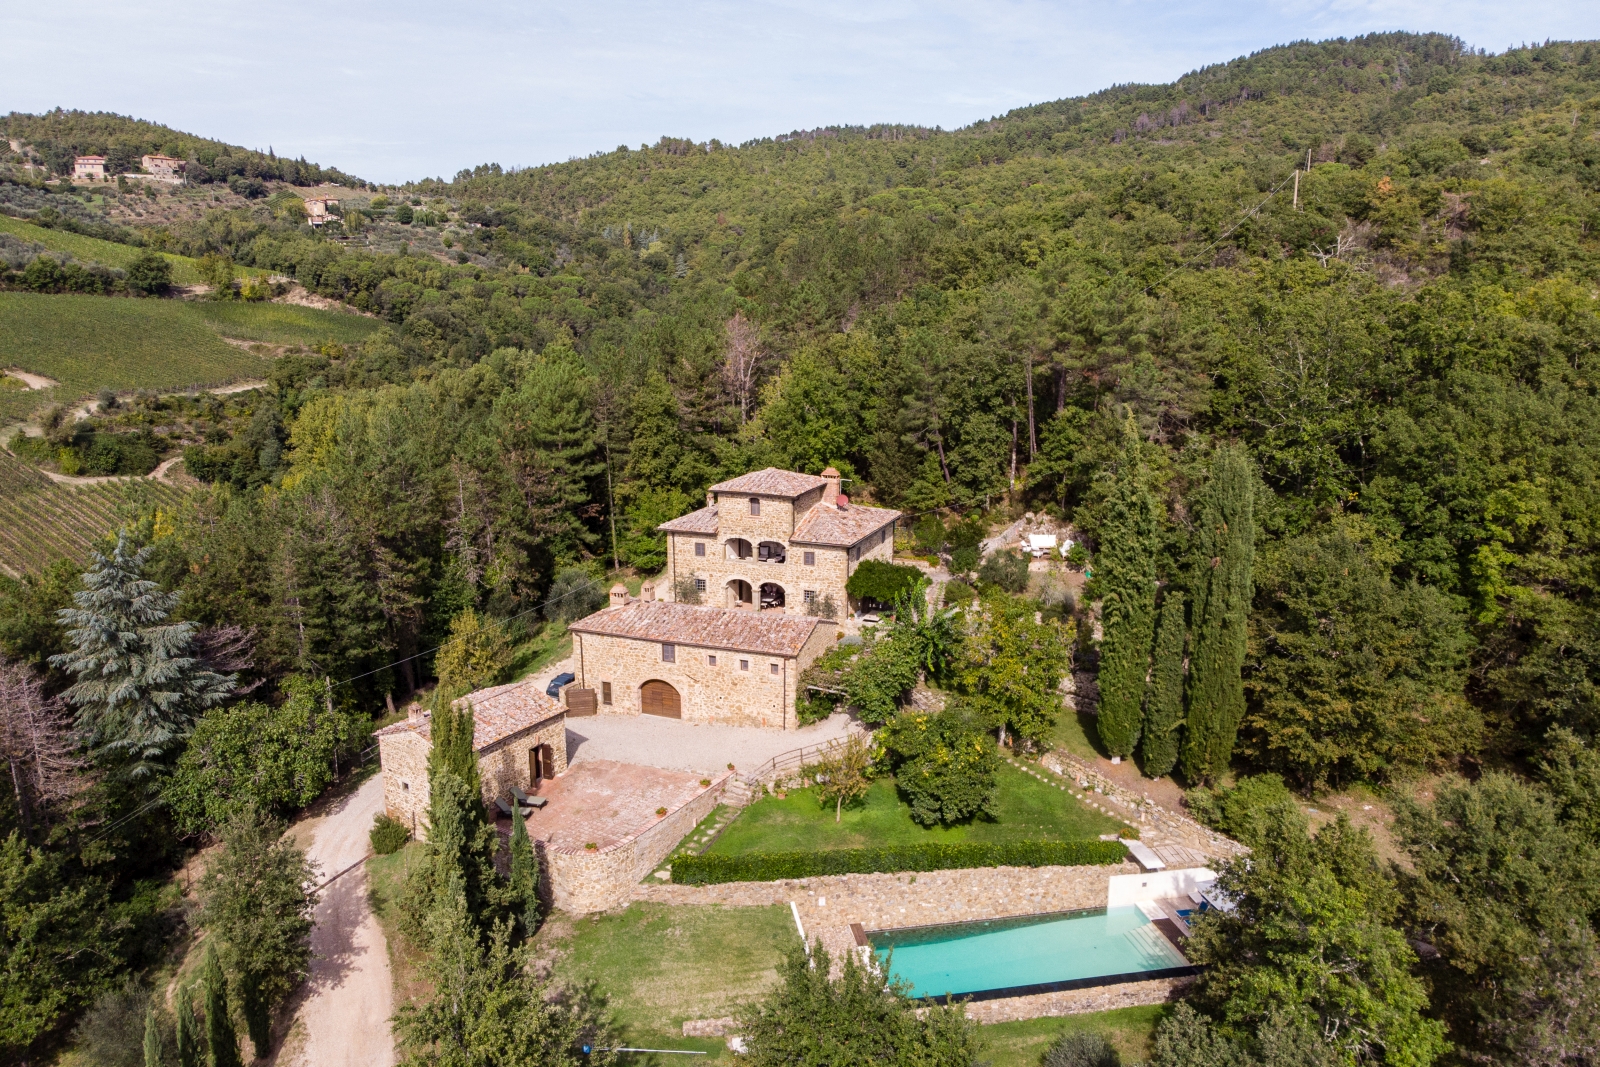 Aerial view of Villa Baciata in Tuscany Italy